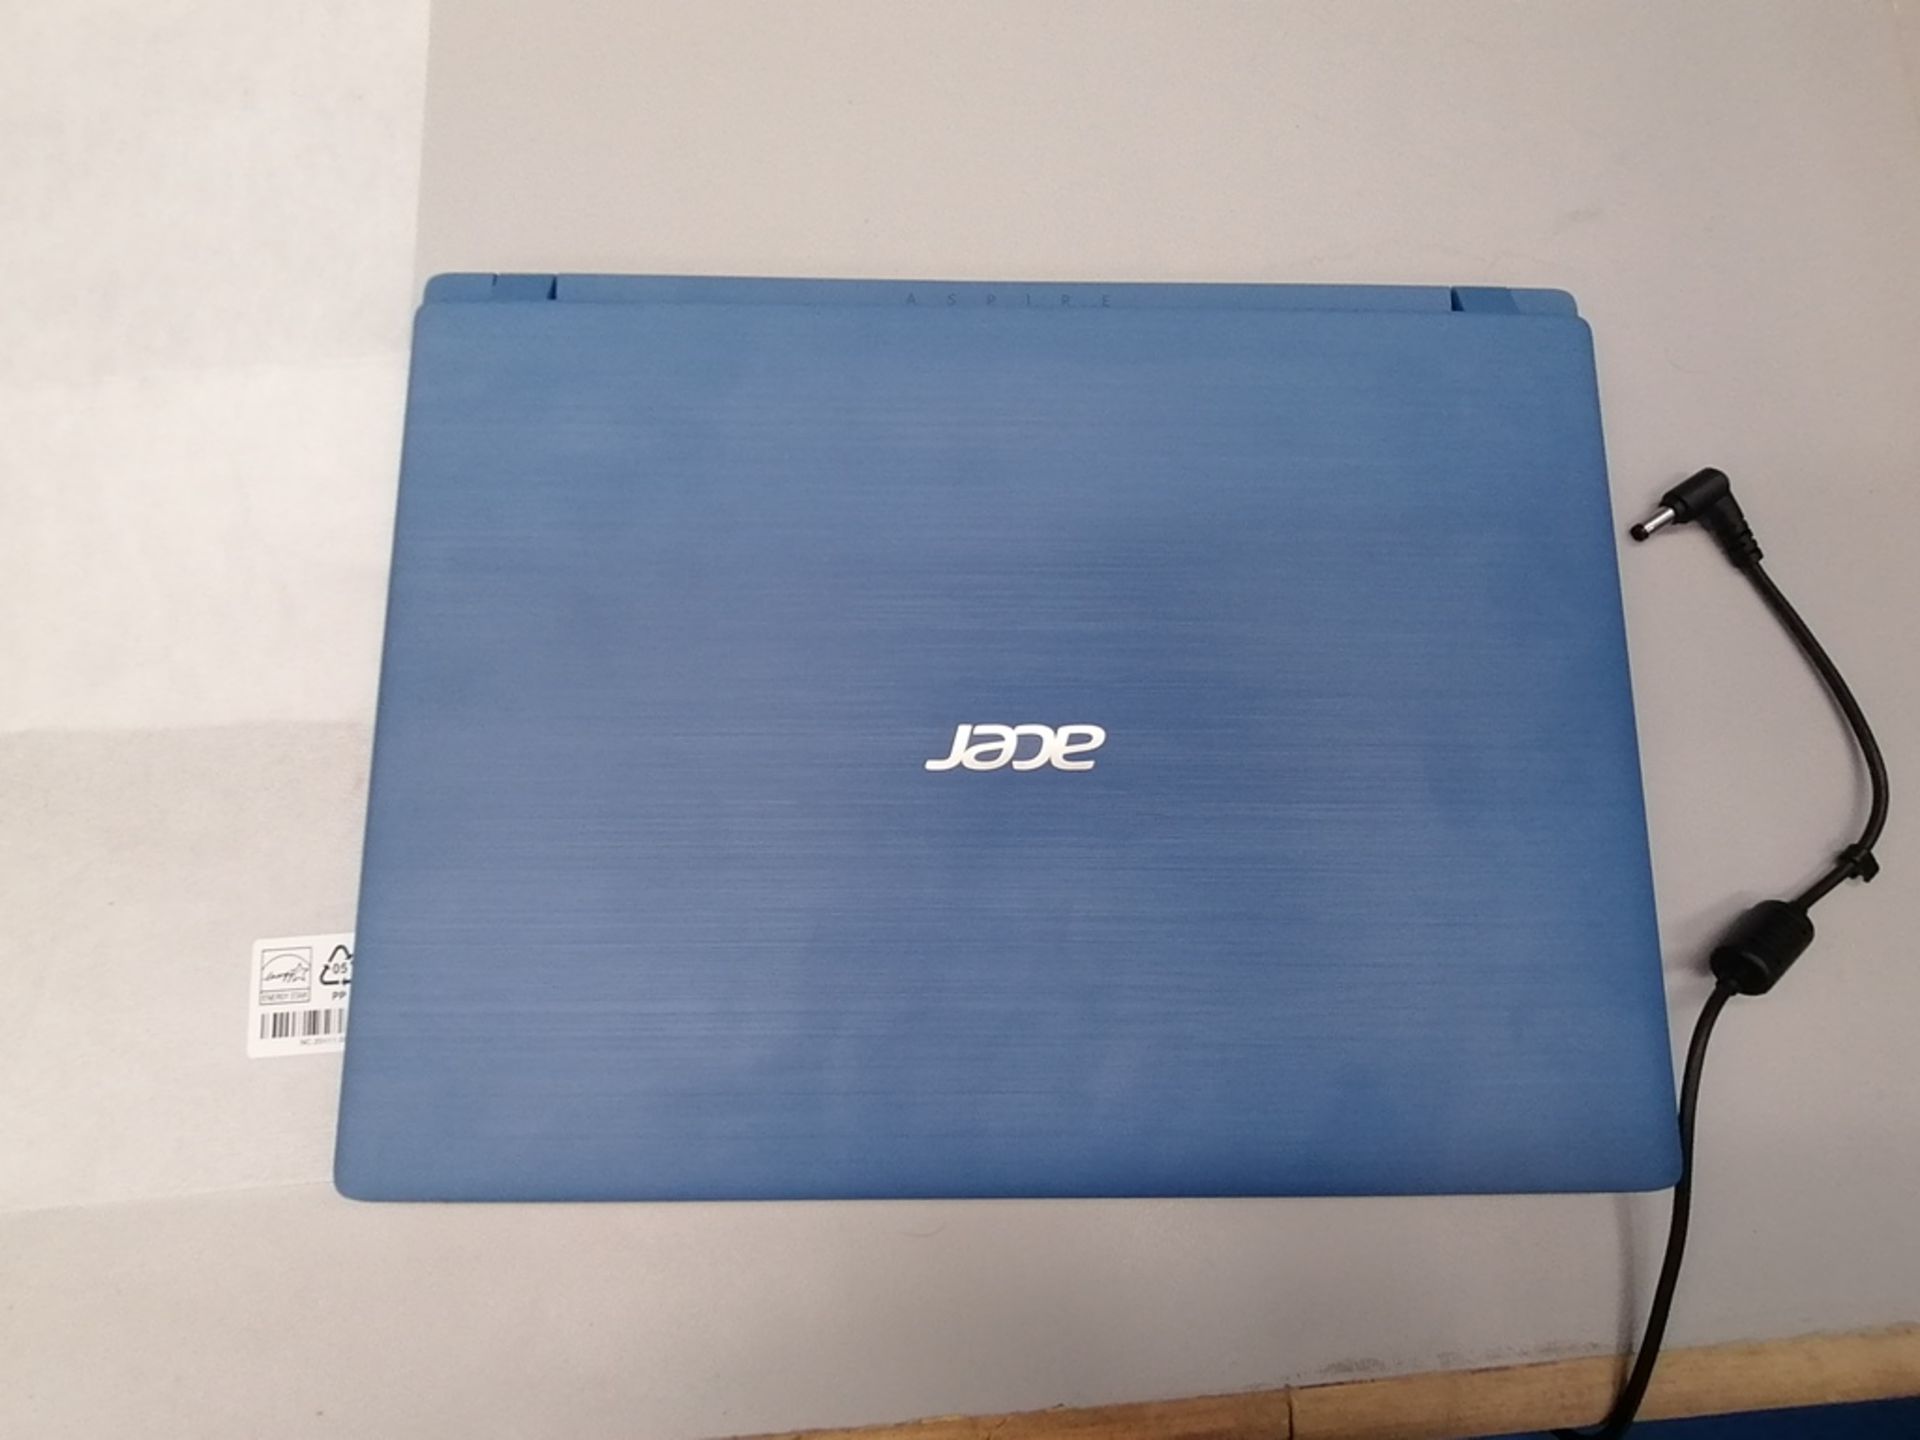 1 Computadora tipo Laptop marca Acer Modelo Aspire 114, Serie NXGW9AL004120391CA7600, Intel Celeron - Image 2 of 5